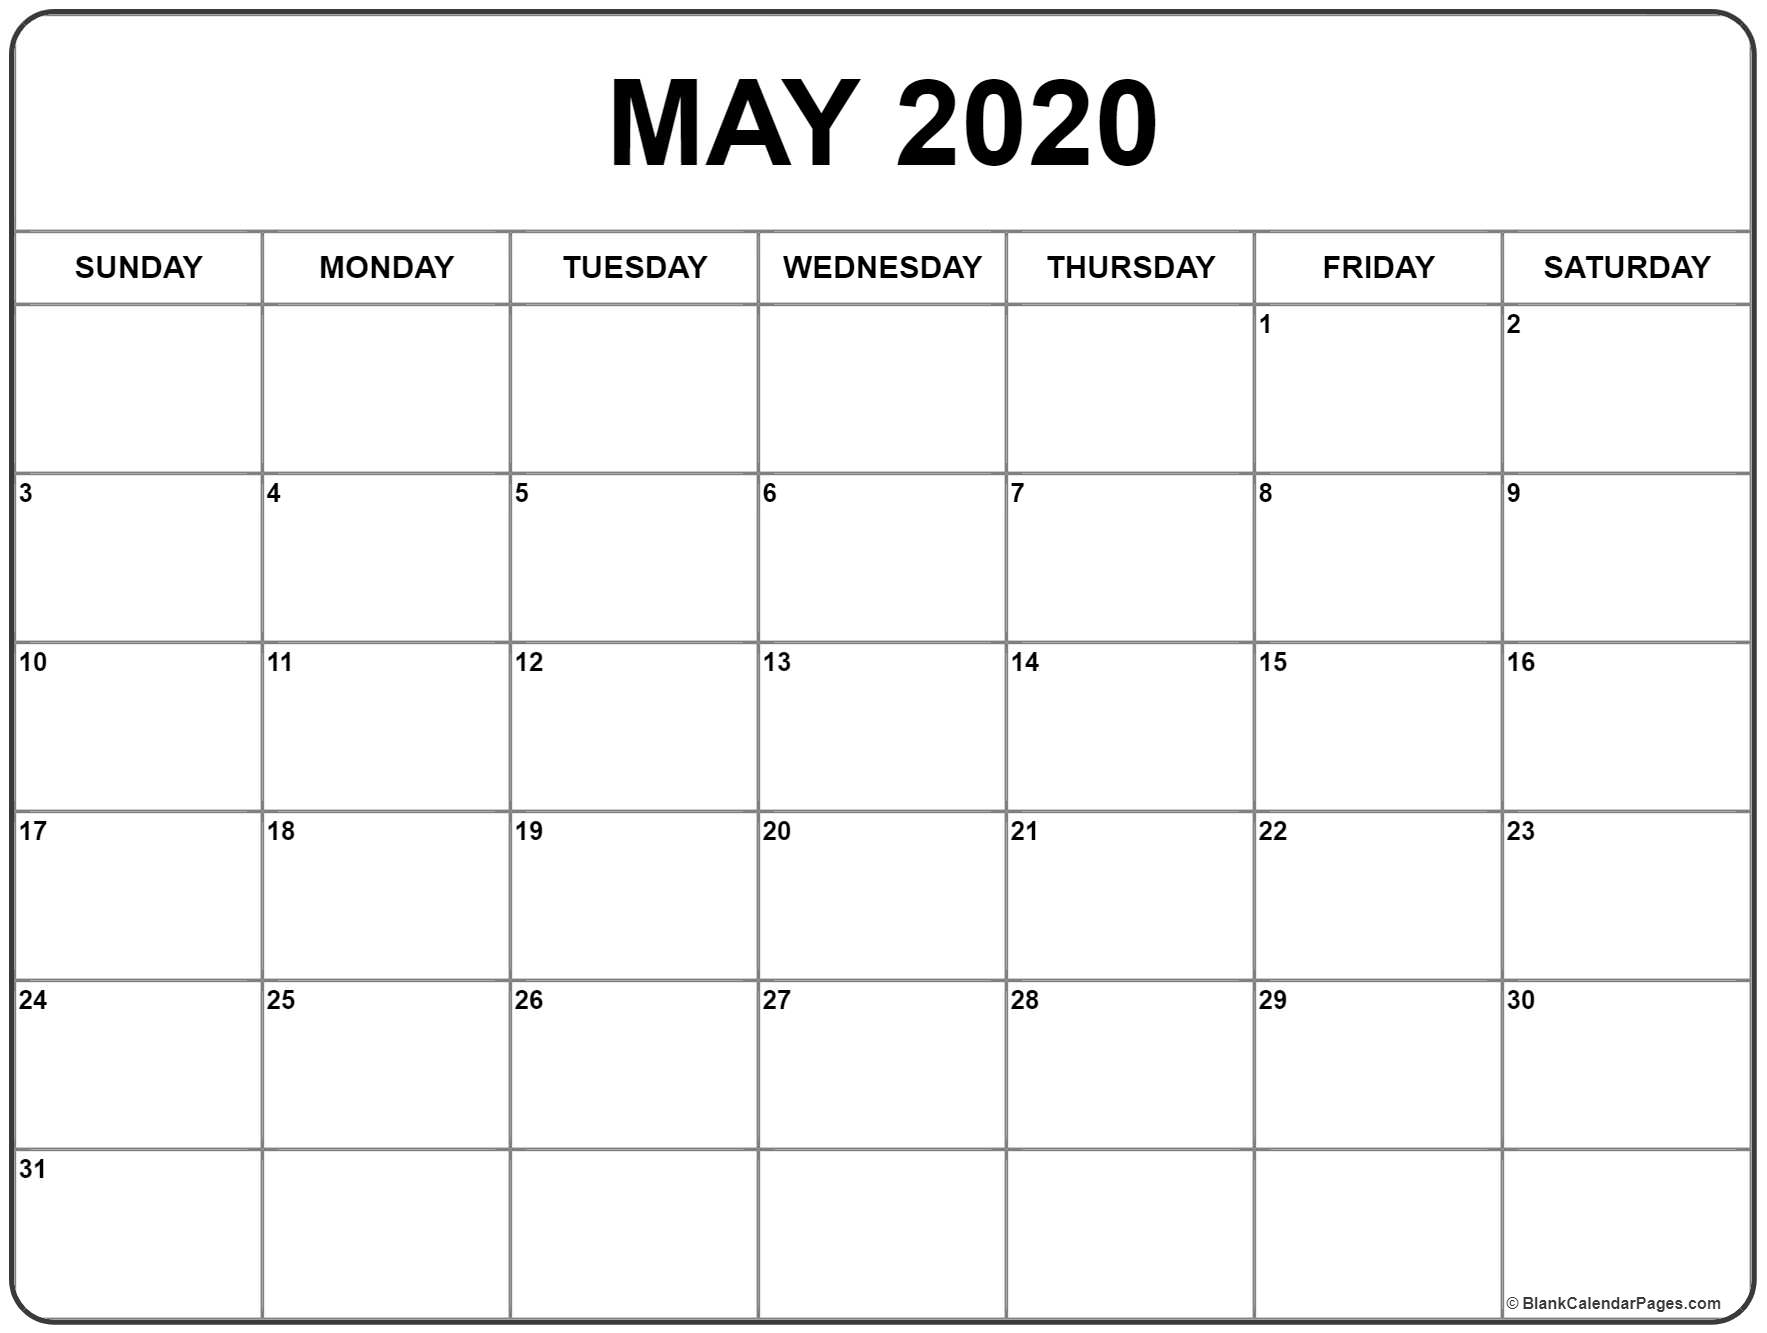 May 2020 Calendar | Free Printable Monthly Calendars within Free 2020Printable Calendars Without Downloading